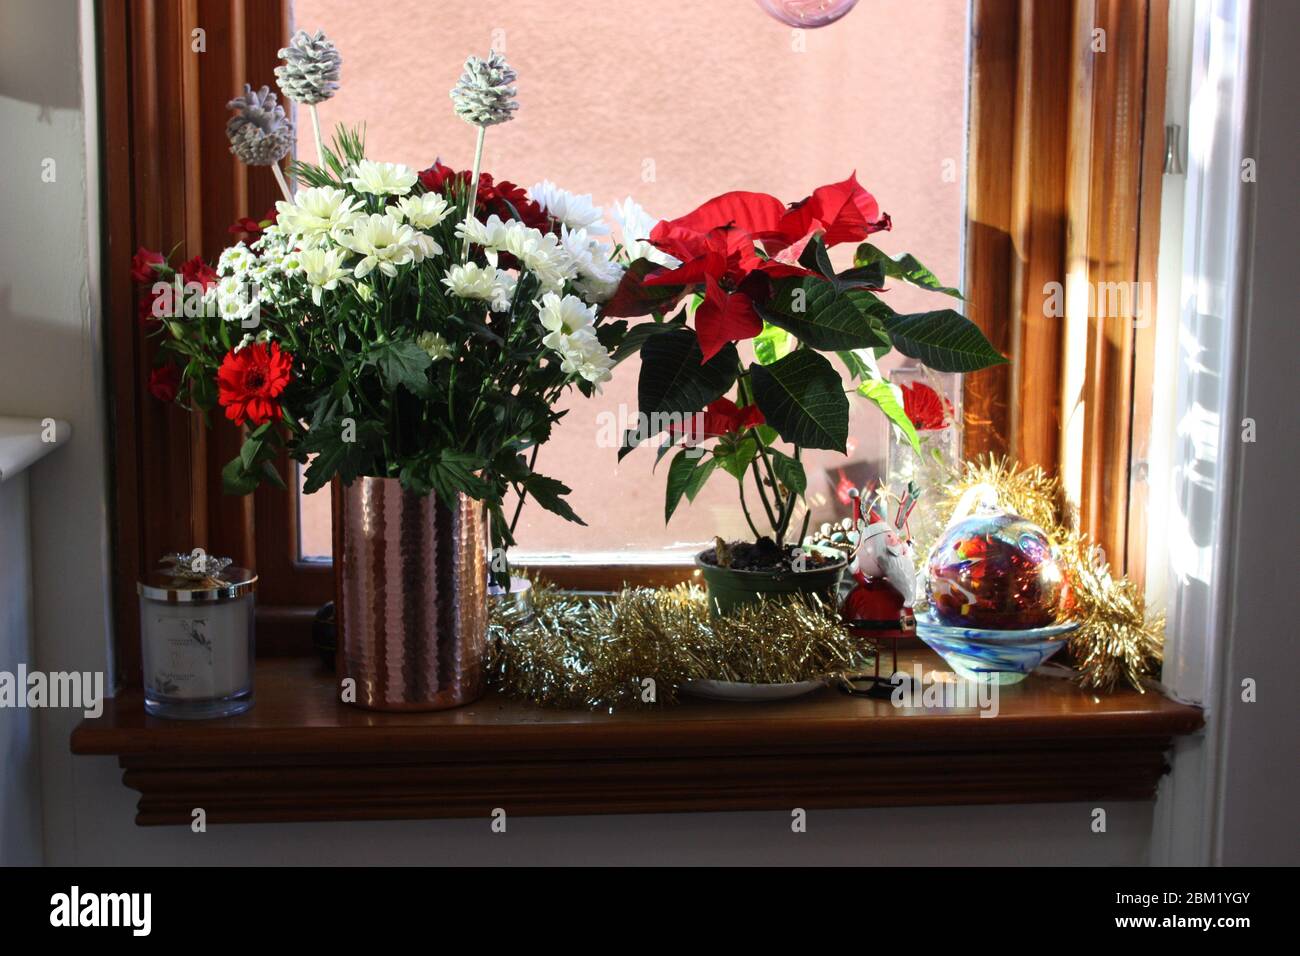 Christmas xmas decorations and flowers on windowsill Stock Photo